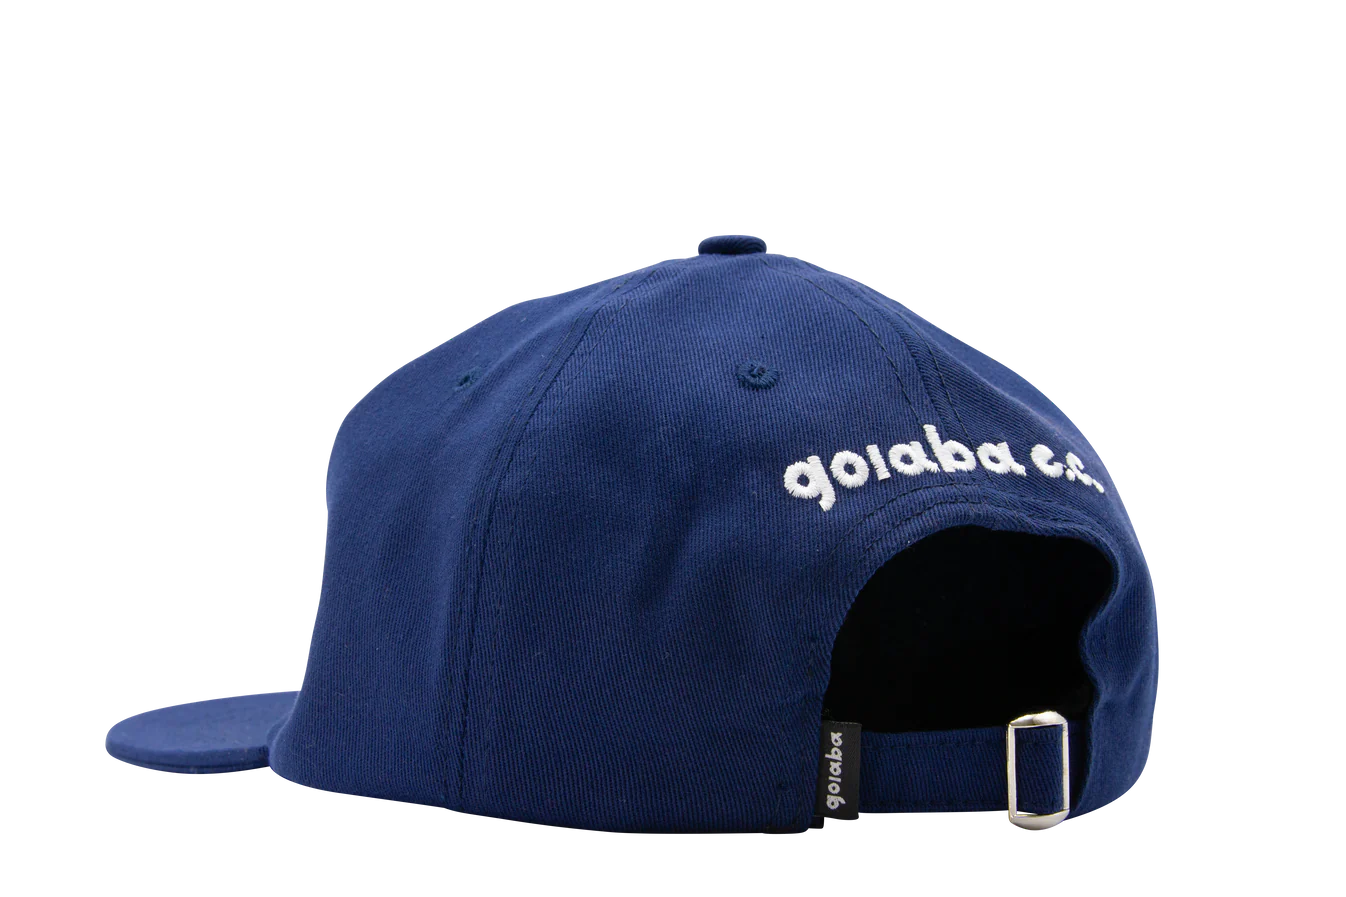 Goiaba E.C. - Campo 6-Panel Cotton Hat - Navy Blue